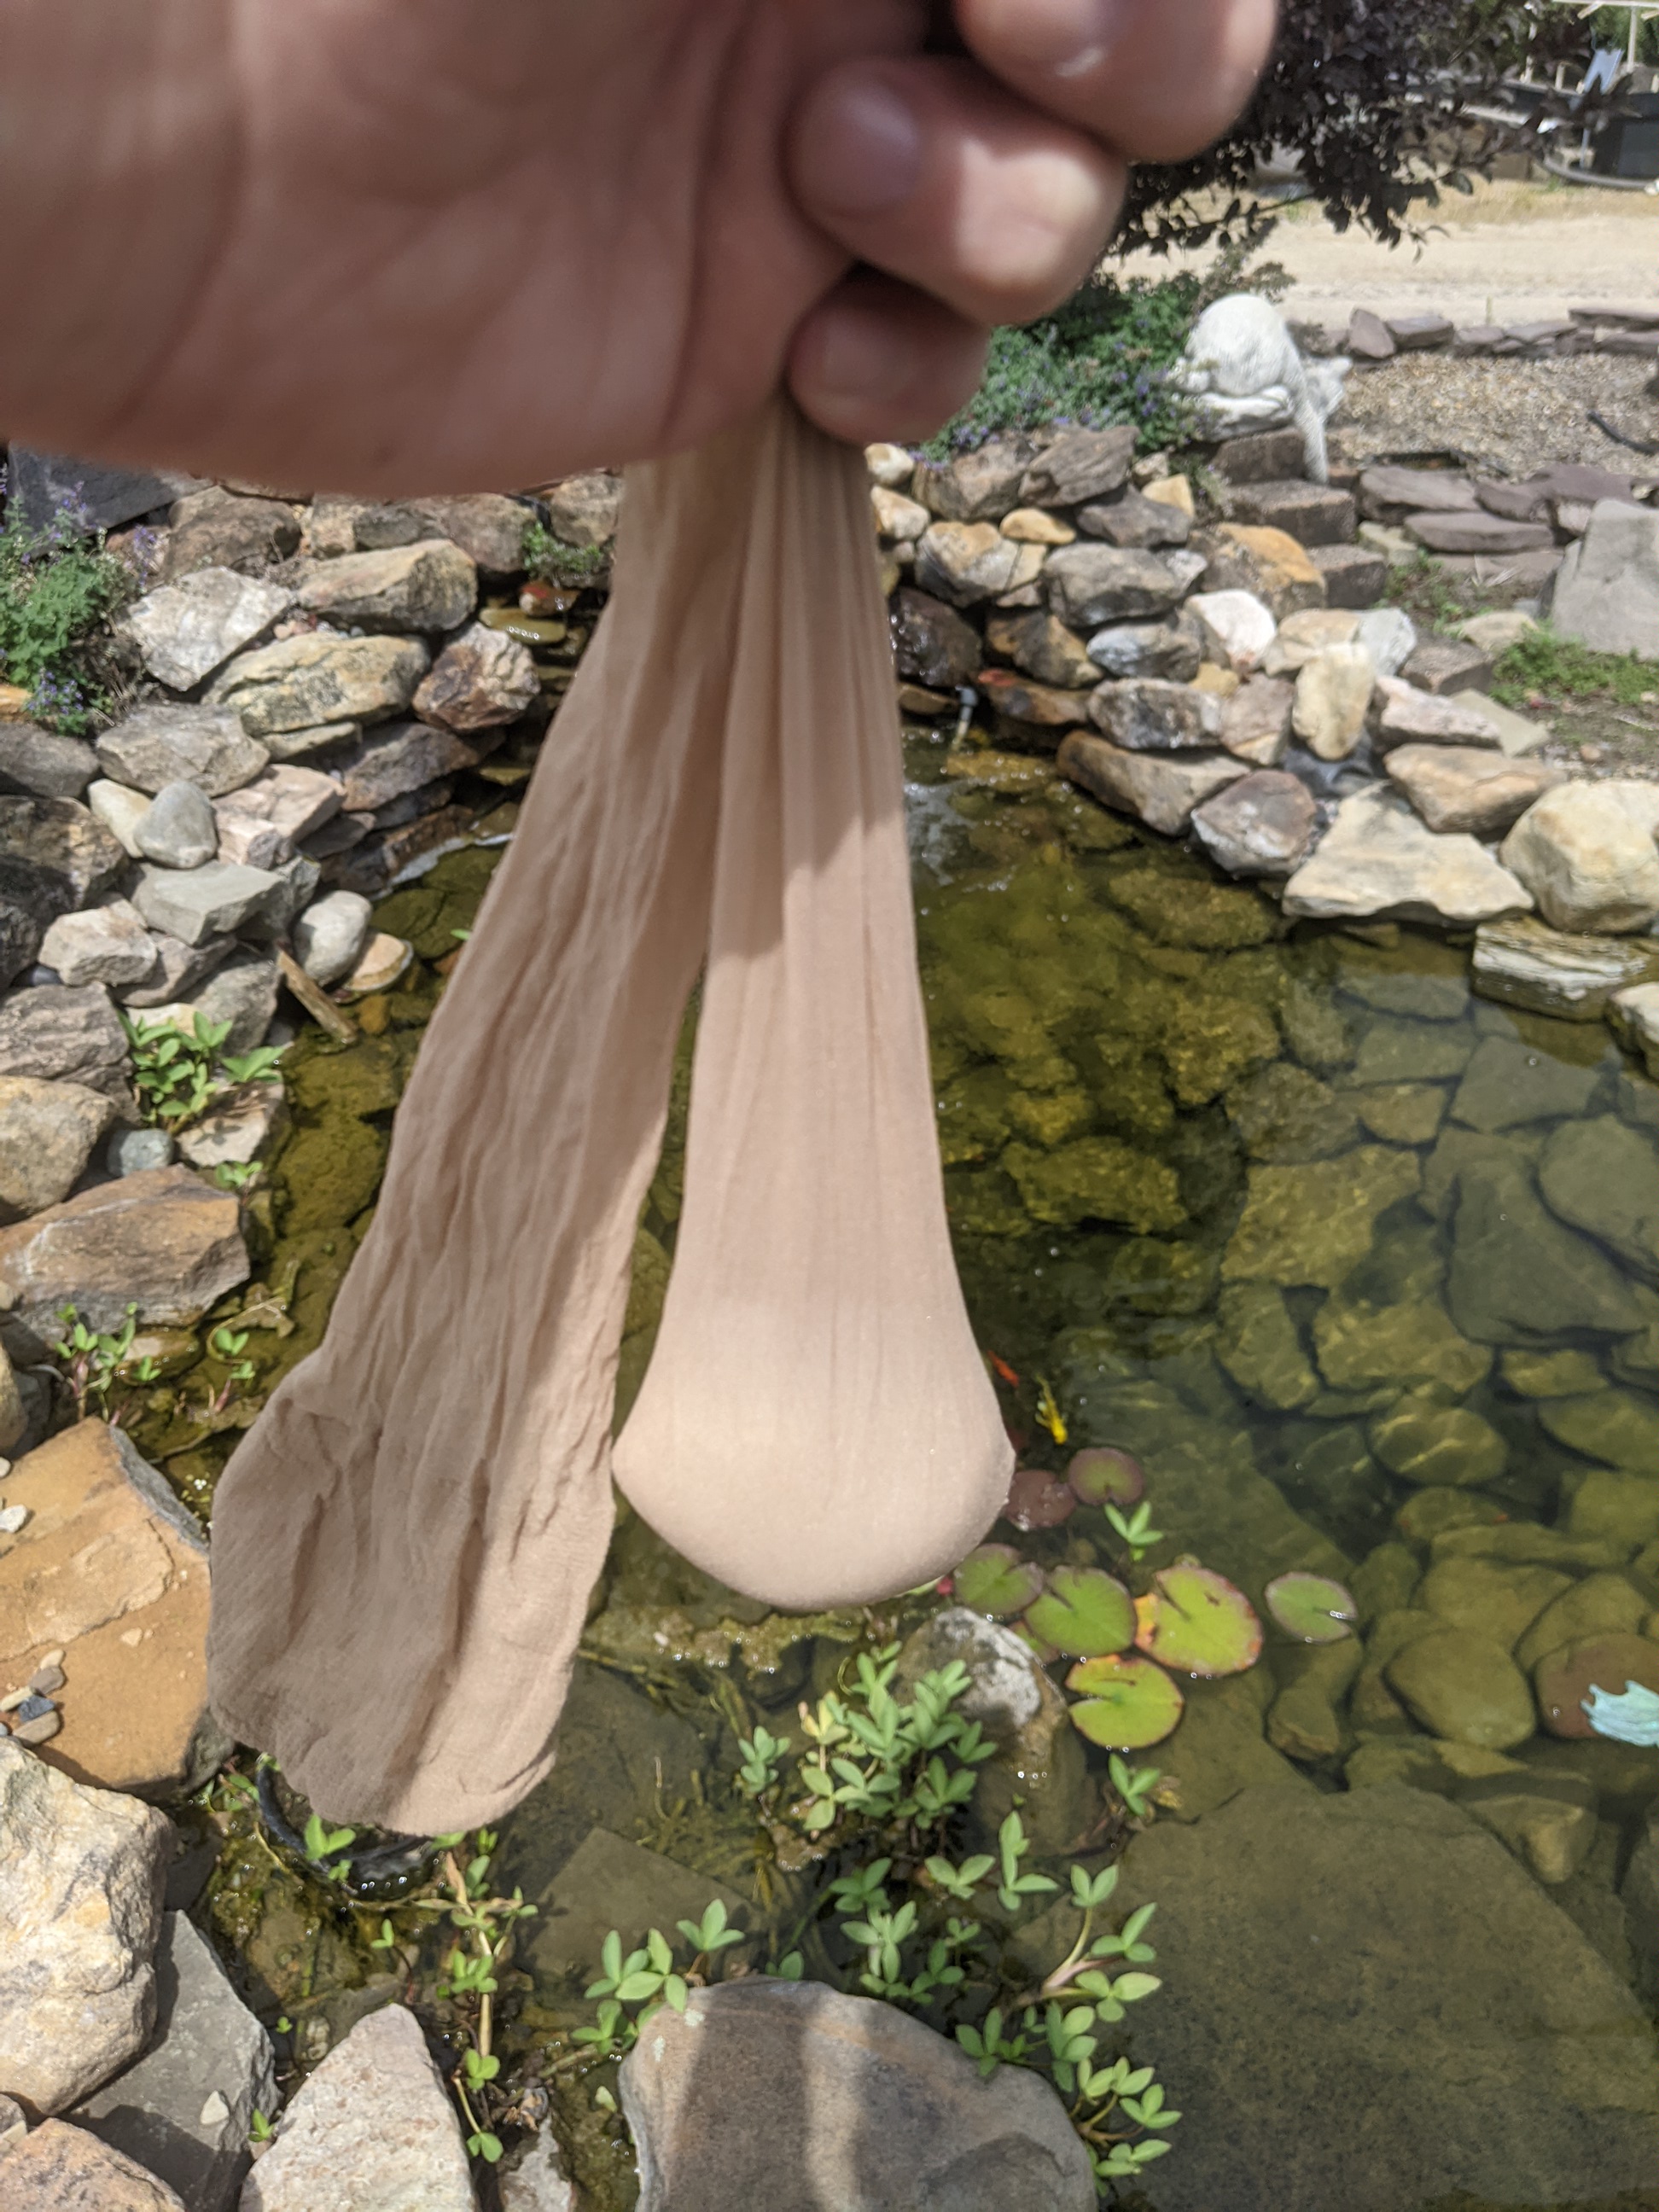 Pond Salt Treatment using pantyhose